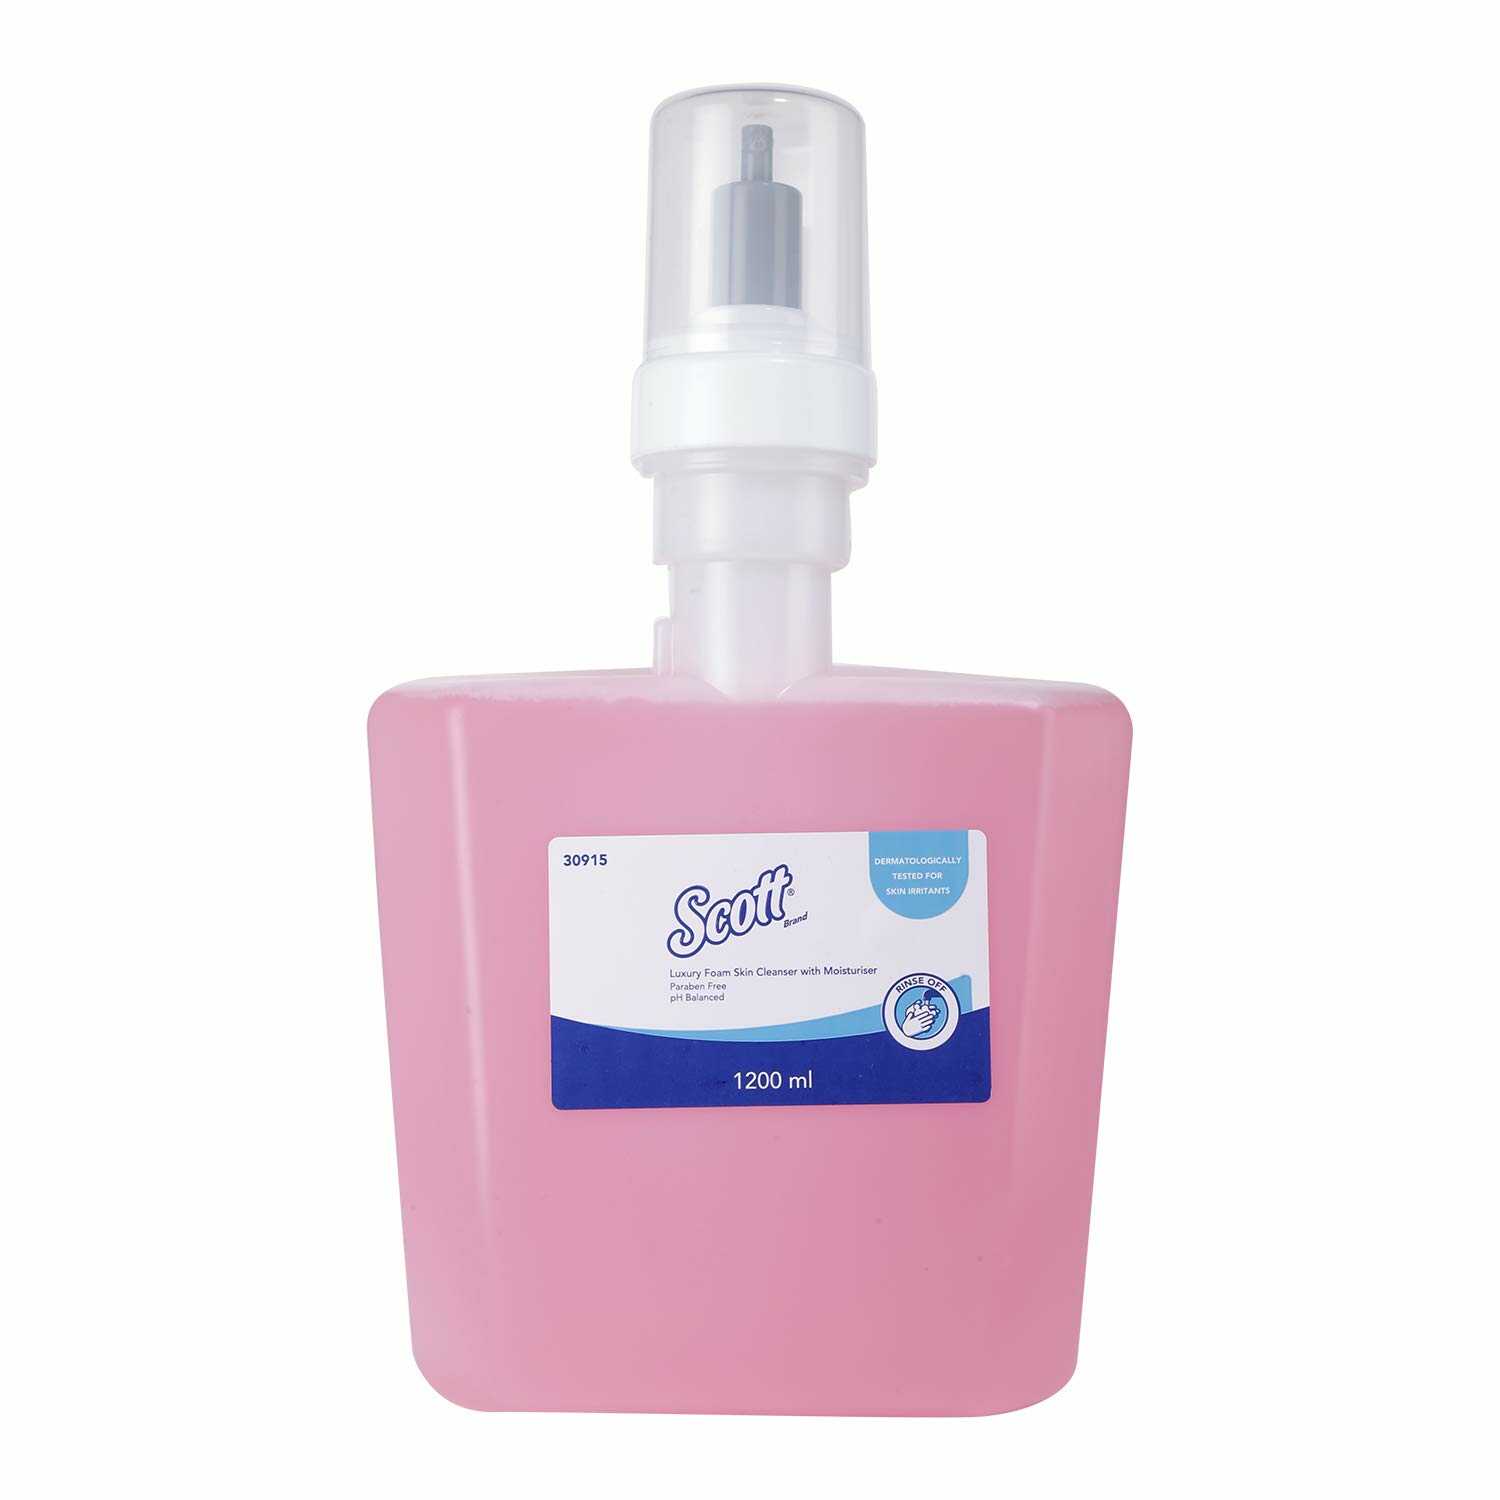 Kimberly Clark* Scott* Gentle Foam soap Refill, 30915 ( Pack of 6 Refills/Case, 1200ml/Refill, Total 7200ml )